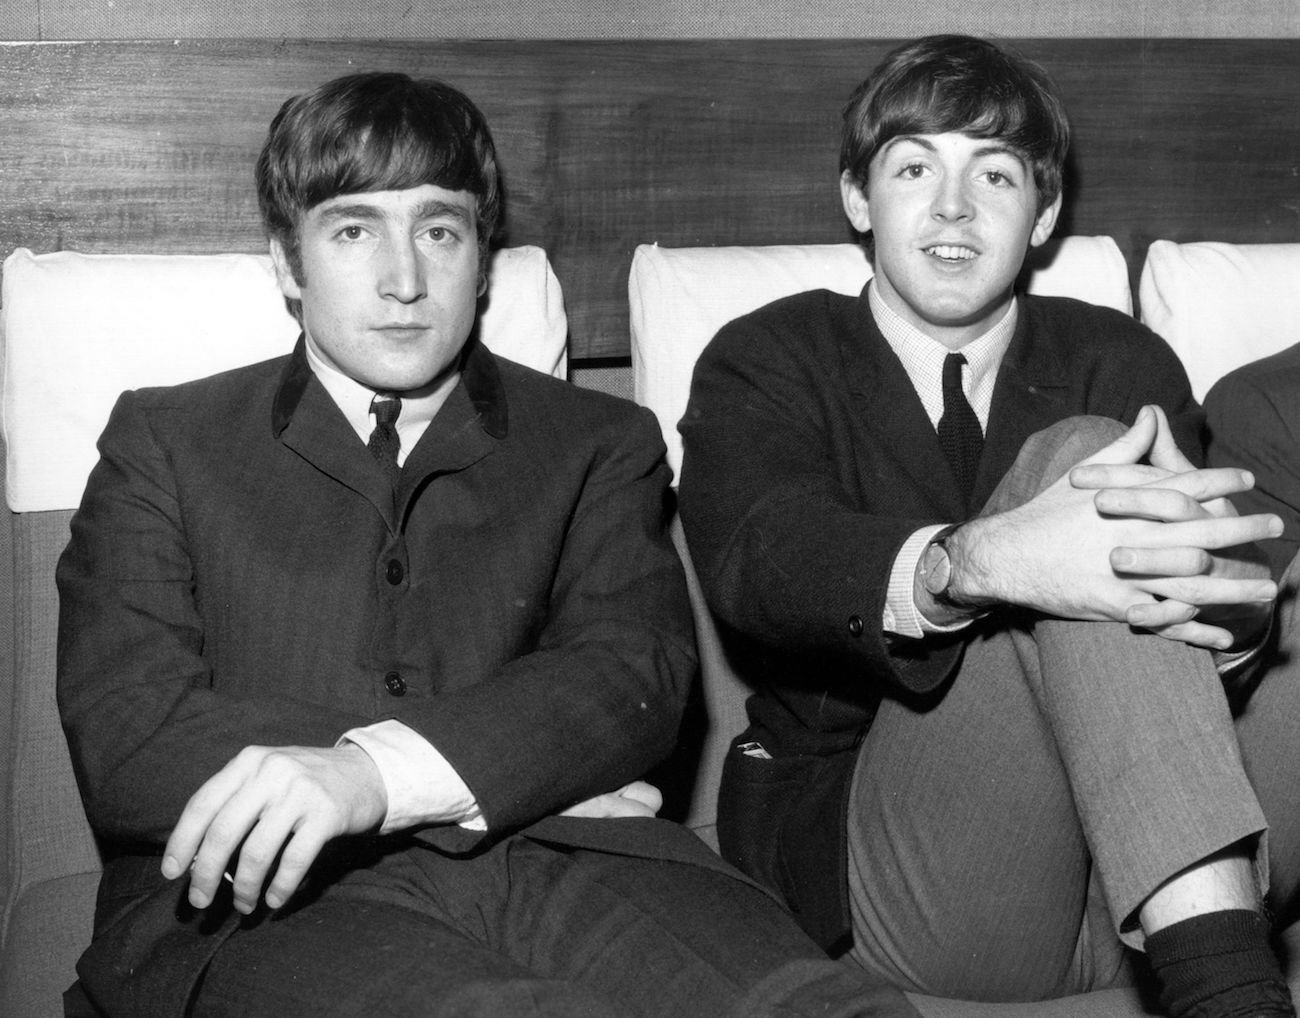 John Lennon and Paul McCartney in suits in 1963.